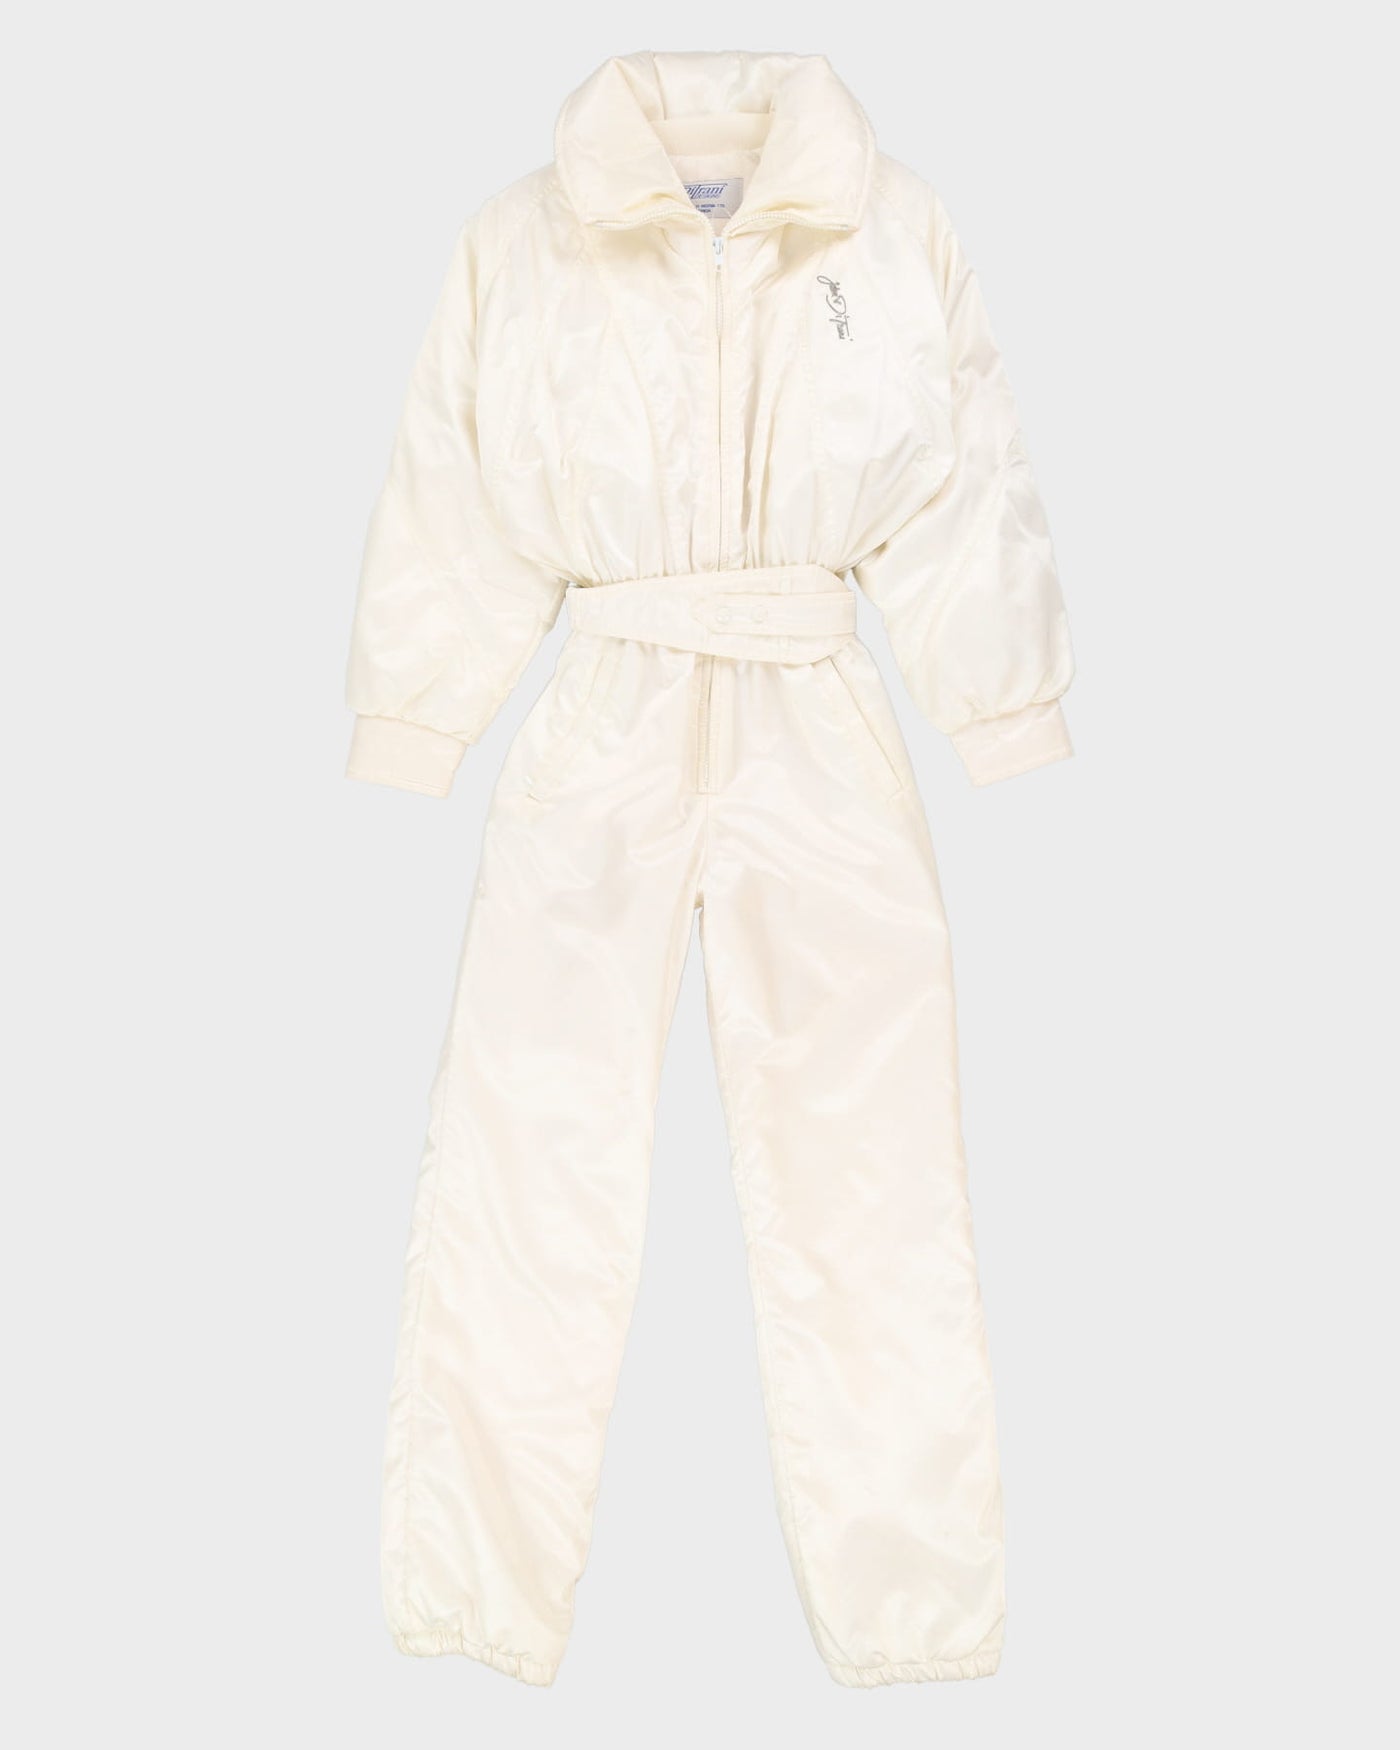 1990s White Ski Suit Overalls - XS